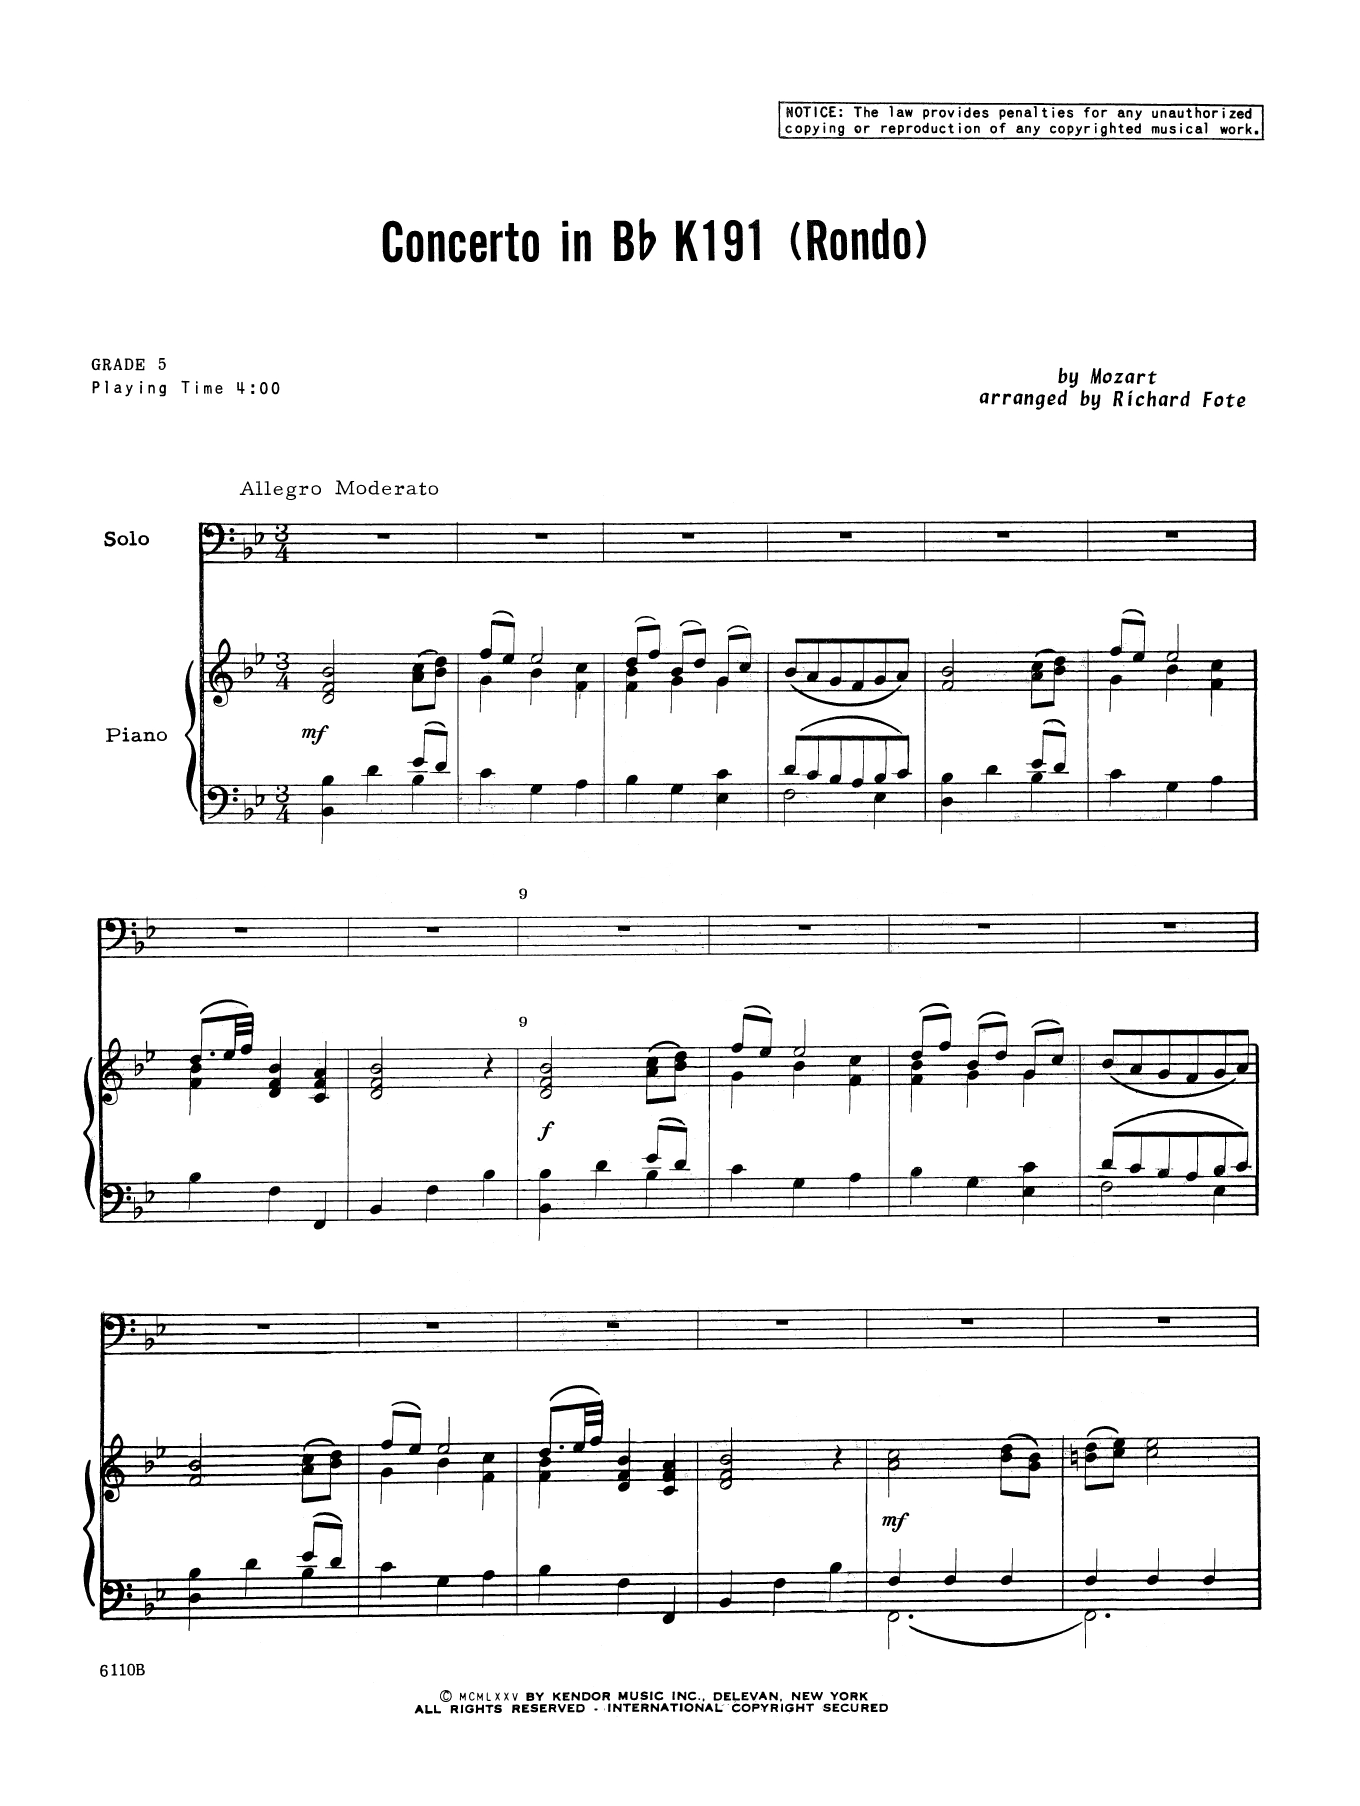 Download Richard Fote Concerto In Bb K191 (Rondo) - Piano Acc Sheet Music